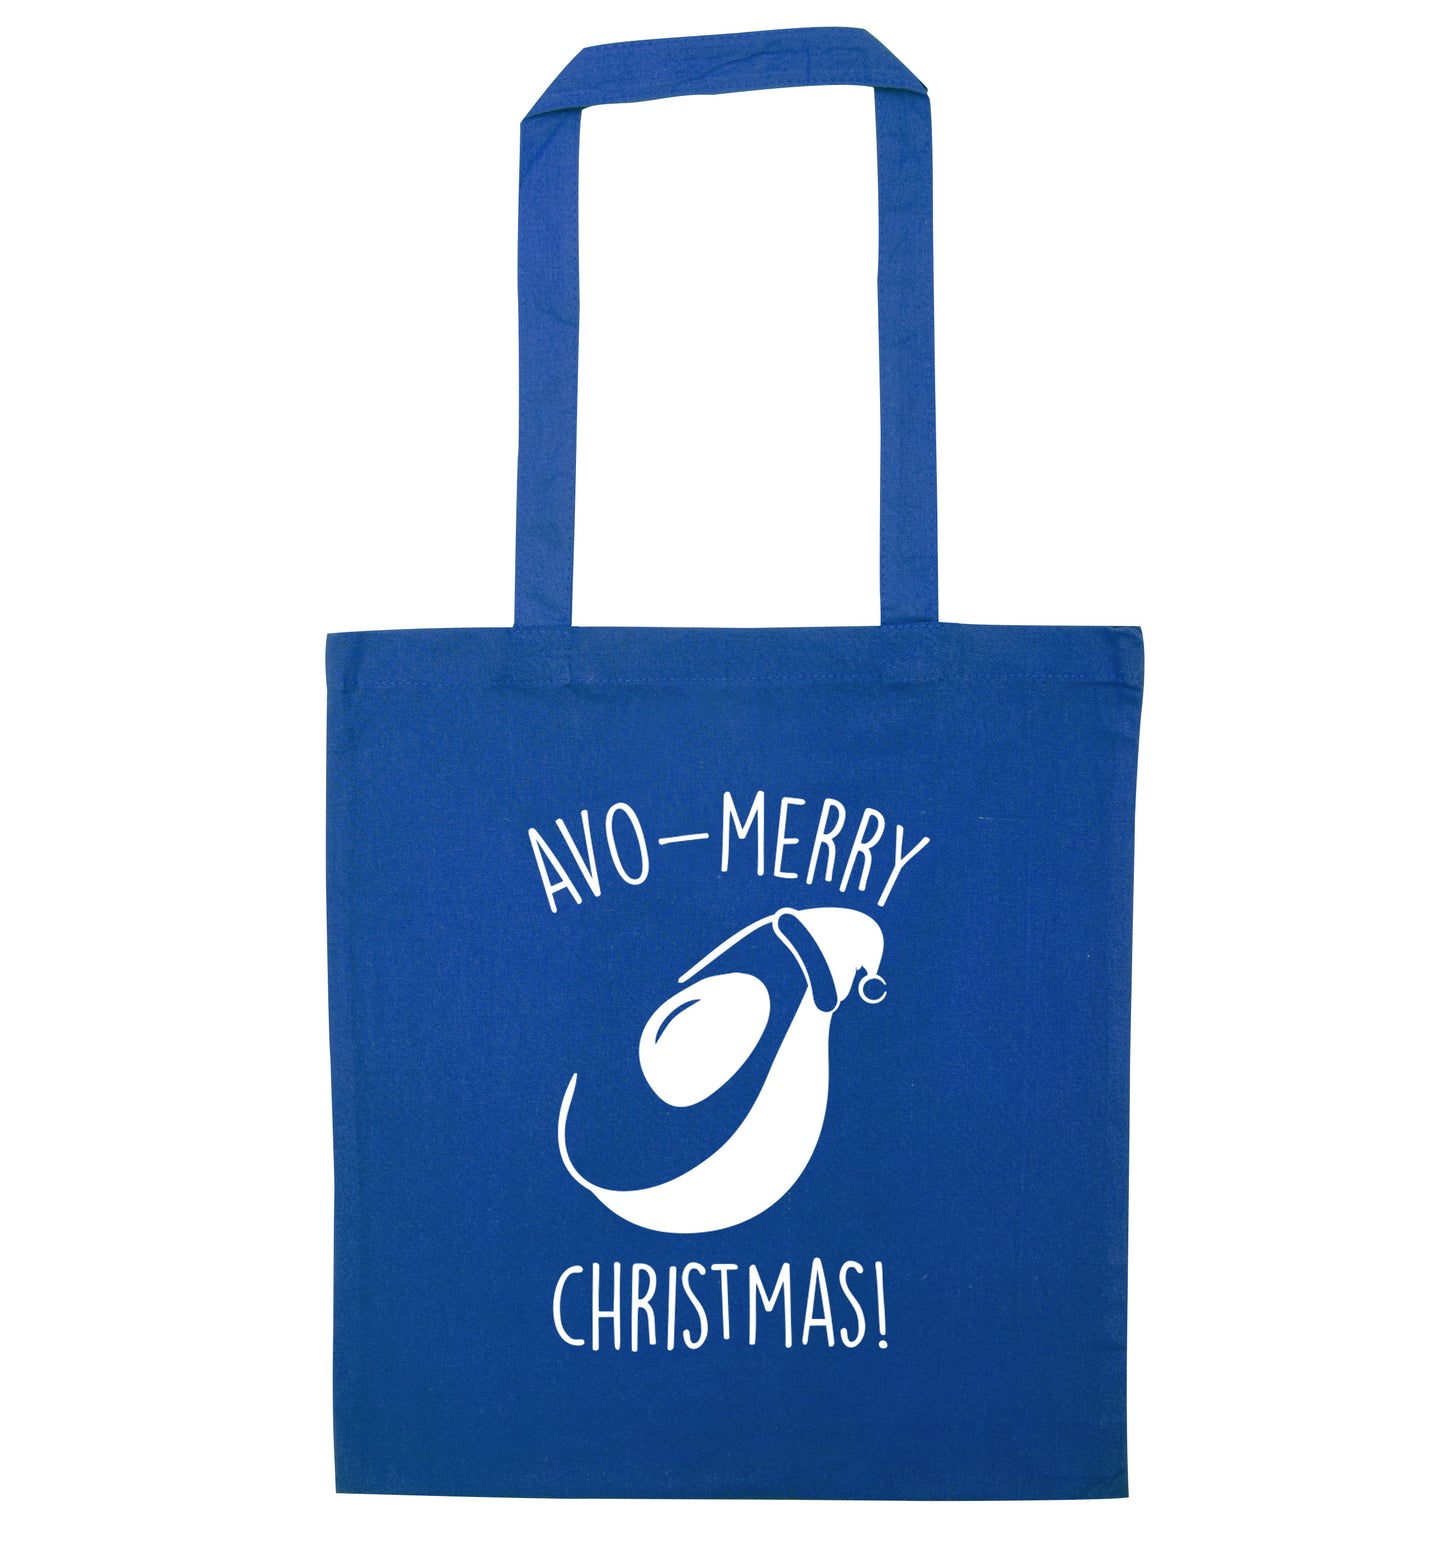 Avo-Merry Christmas blue tote bag